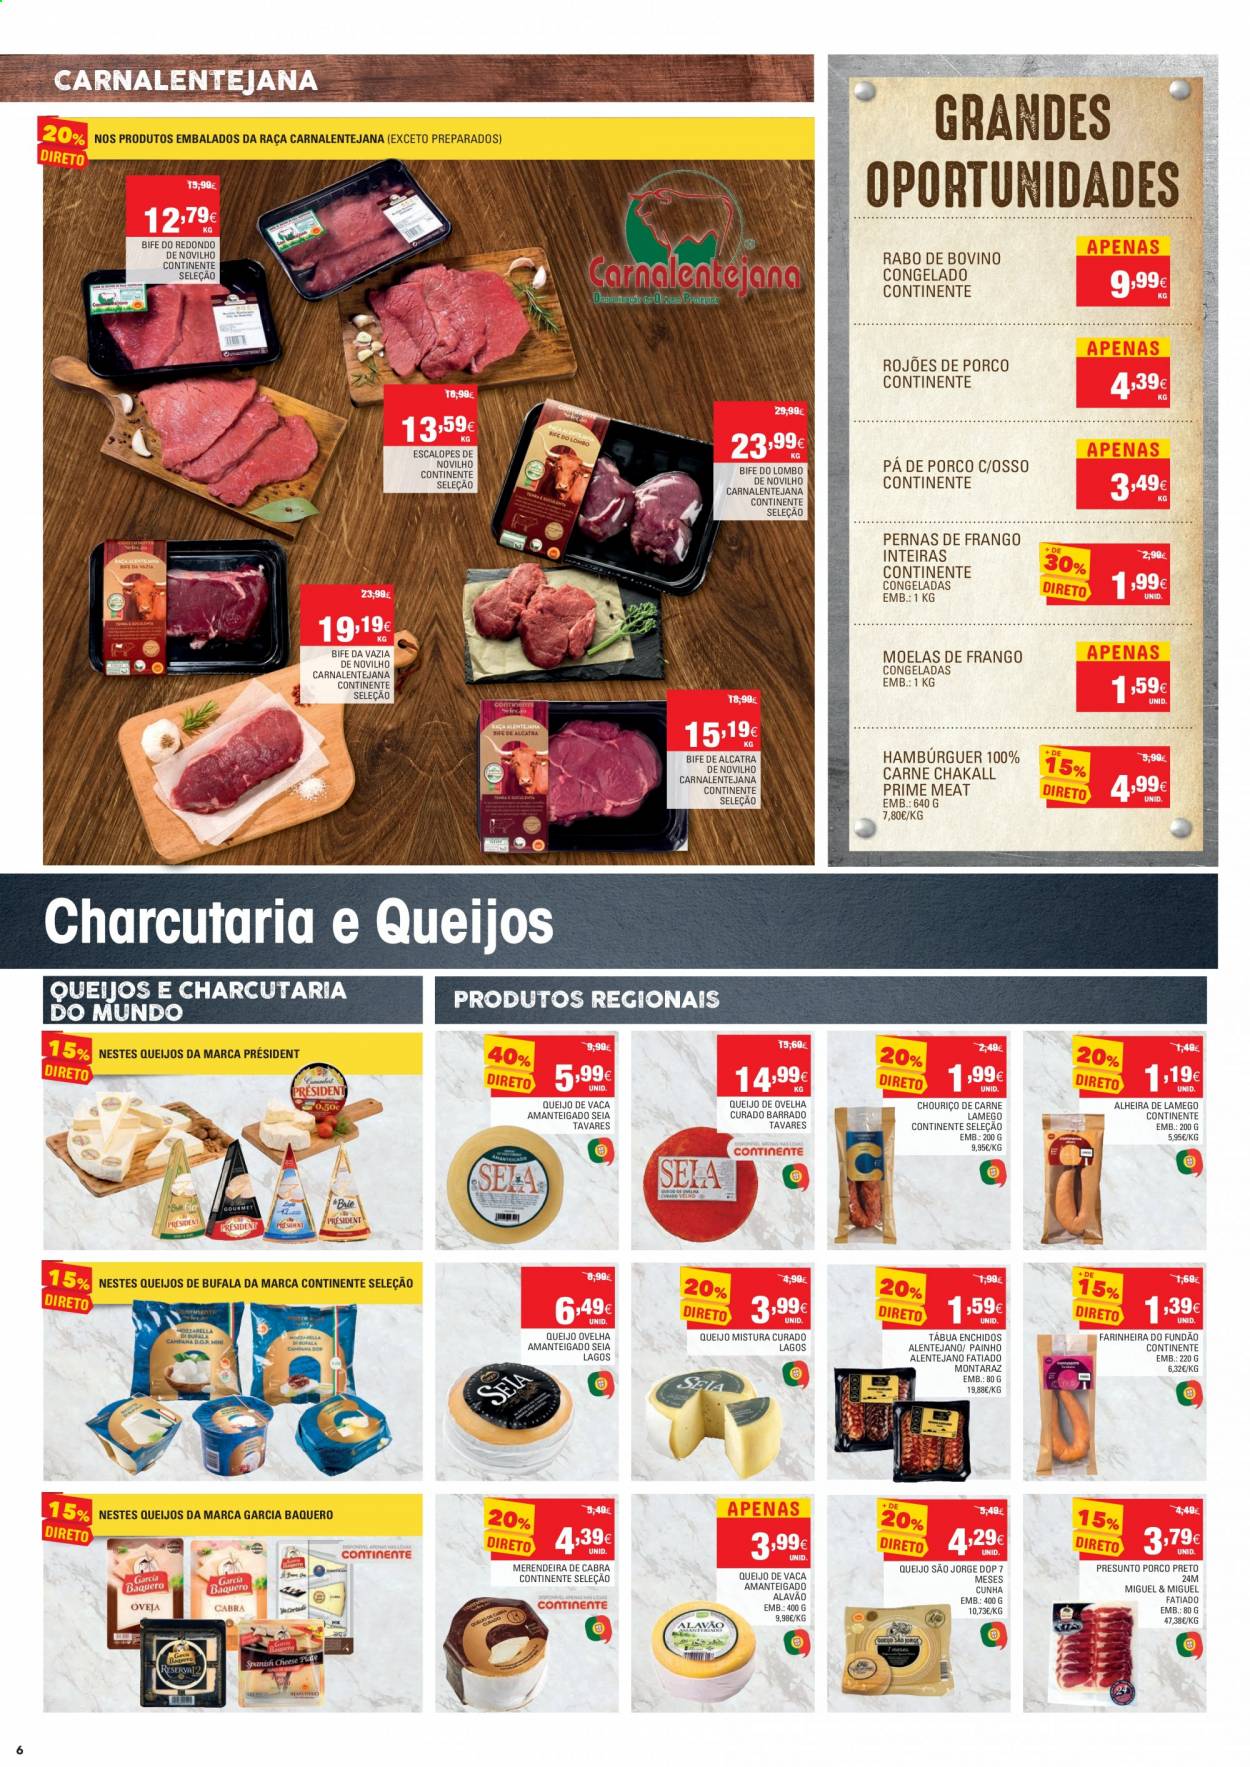 thumbnail - Folheto Continente - 8.6.2021 - 14.6.2021 - Produtos em promoção - bife, lombo, alcatra, rabo de bovino, hamburger, presunto, queijo. Página 6.